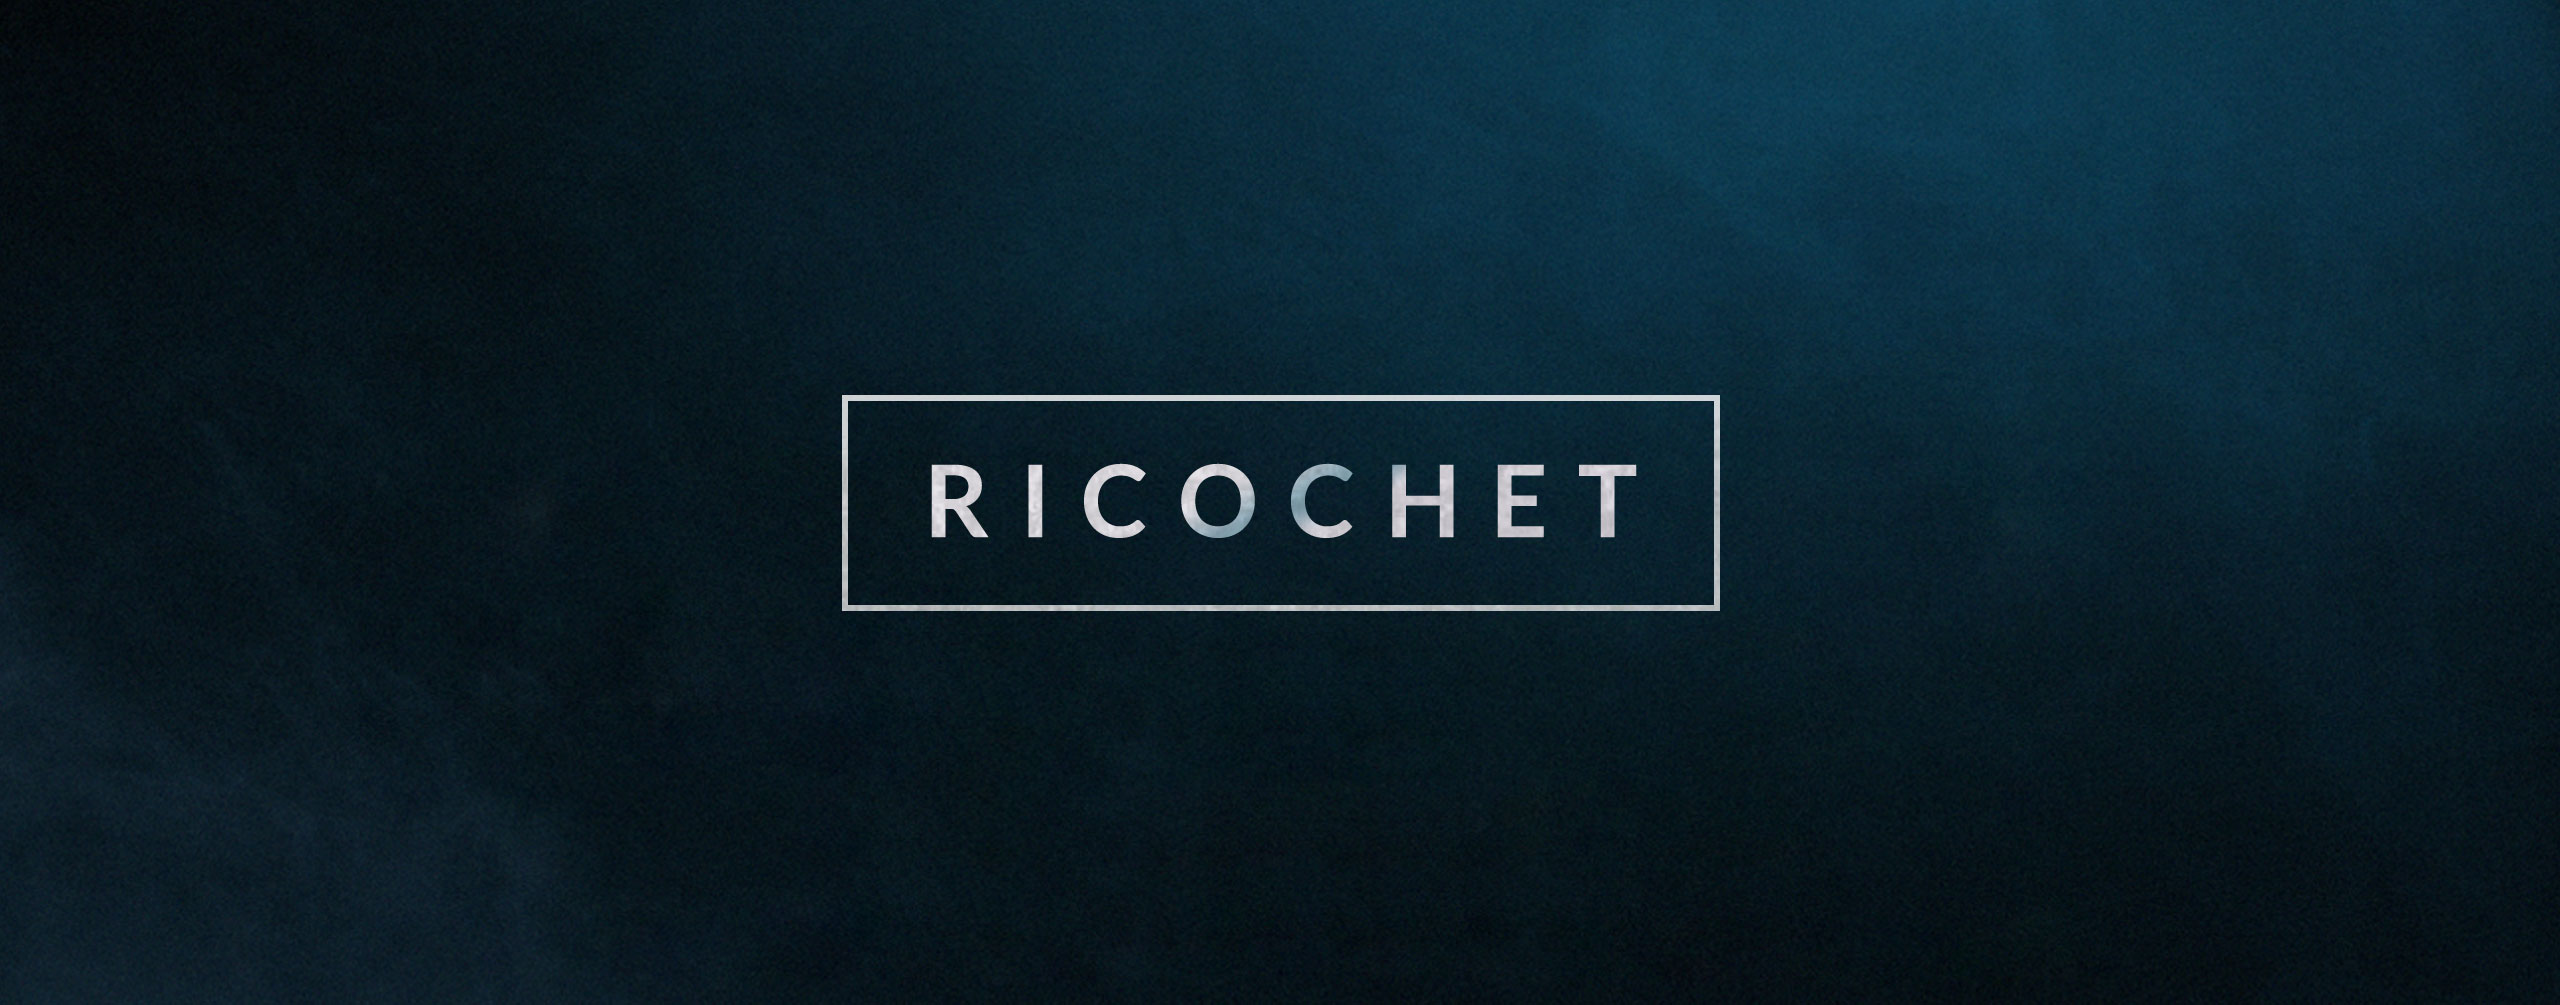 Ricochet - Muzzle Flash Effects